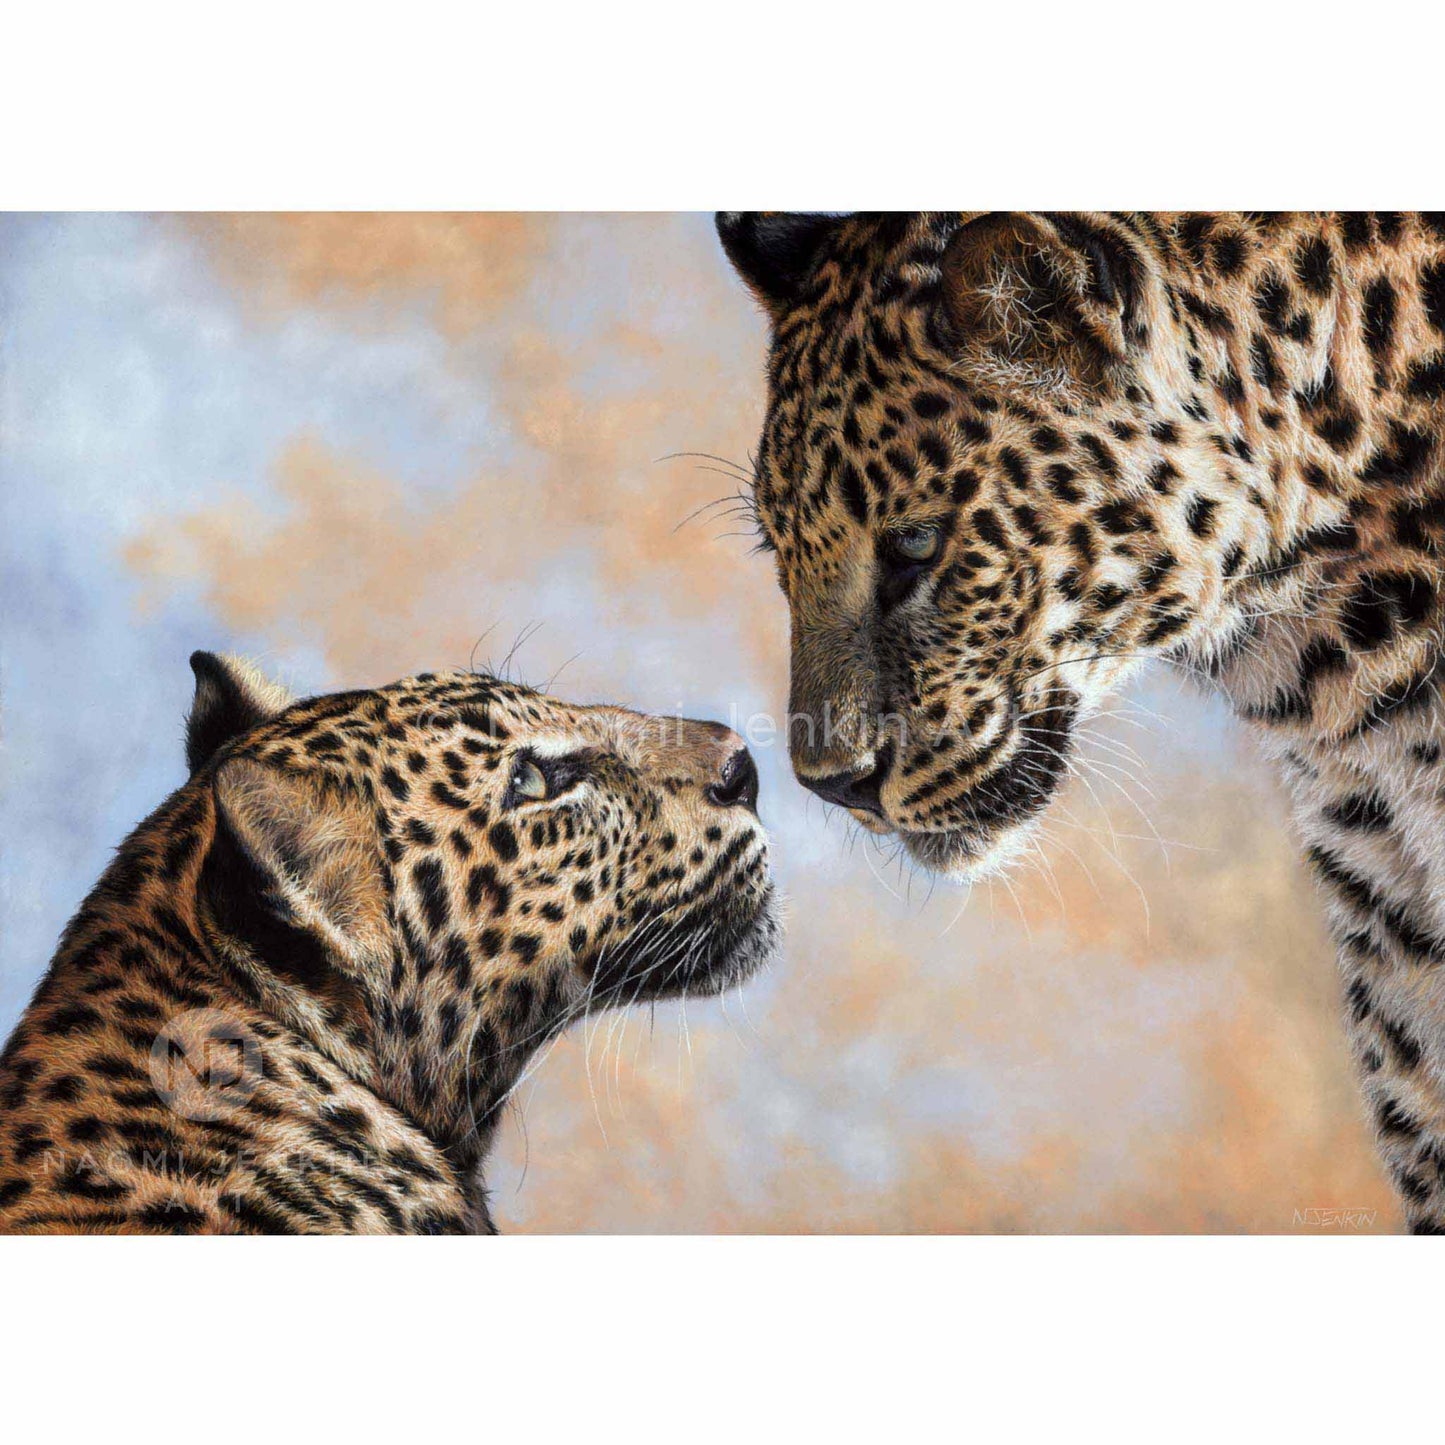 Leopard painting by wildlife artist Naomi Jenkin.